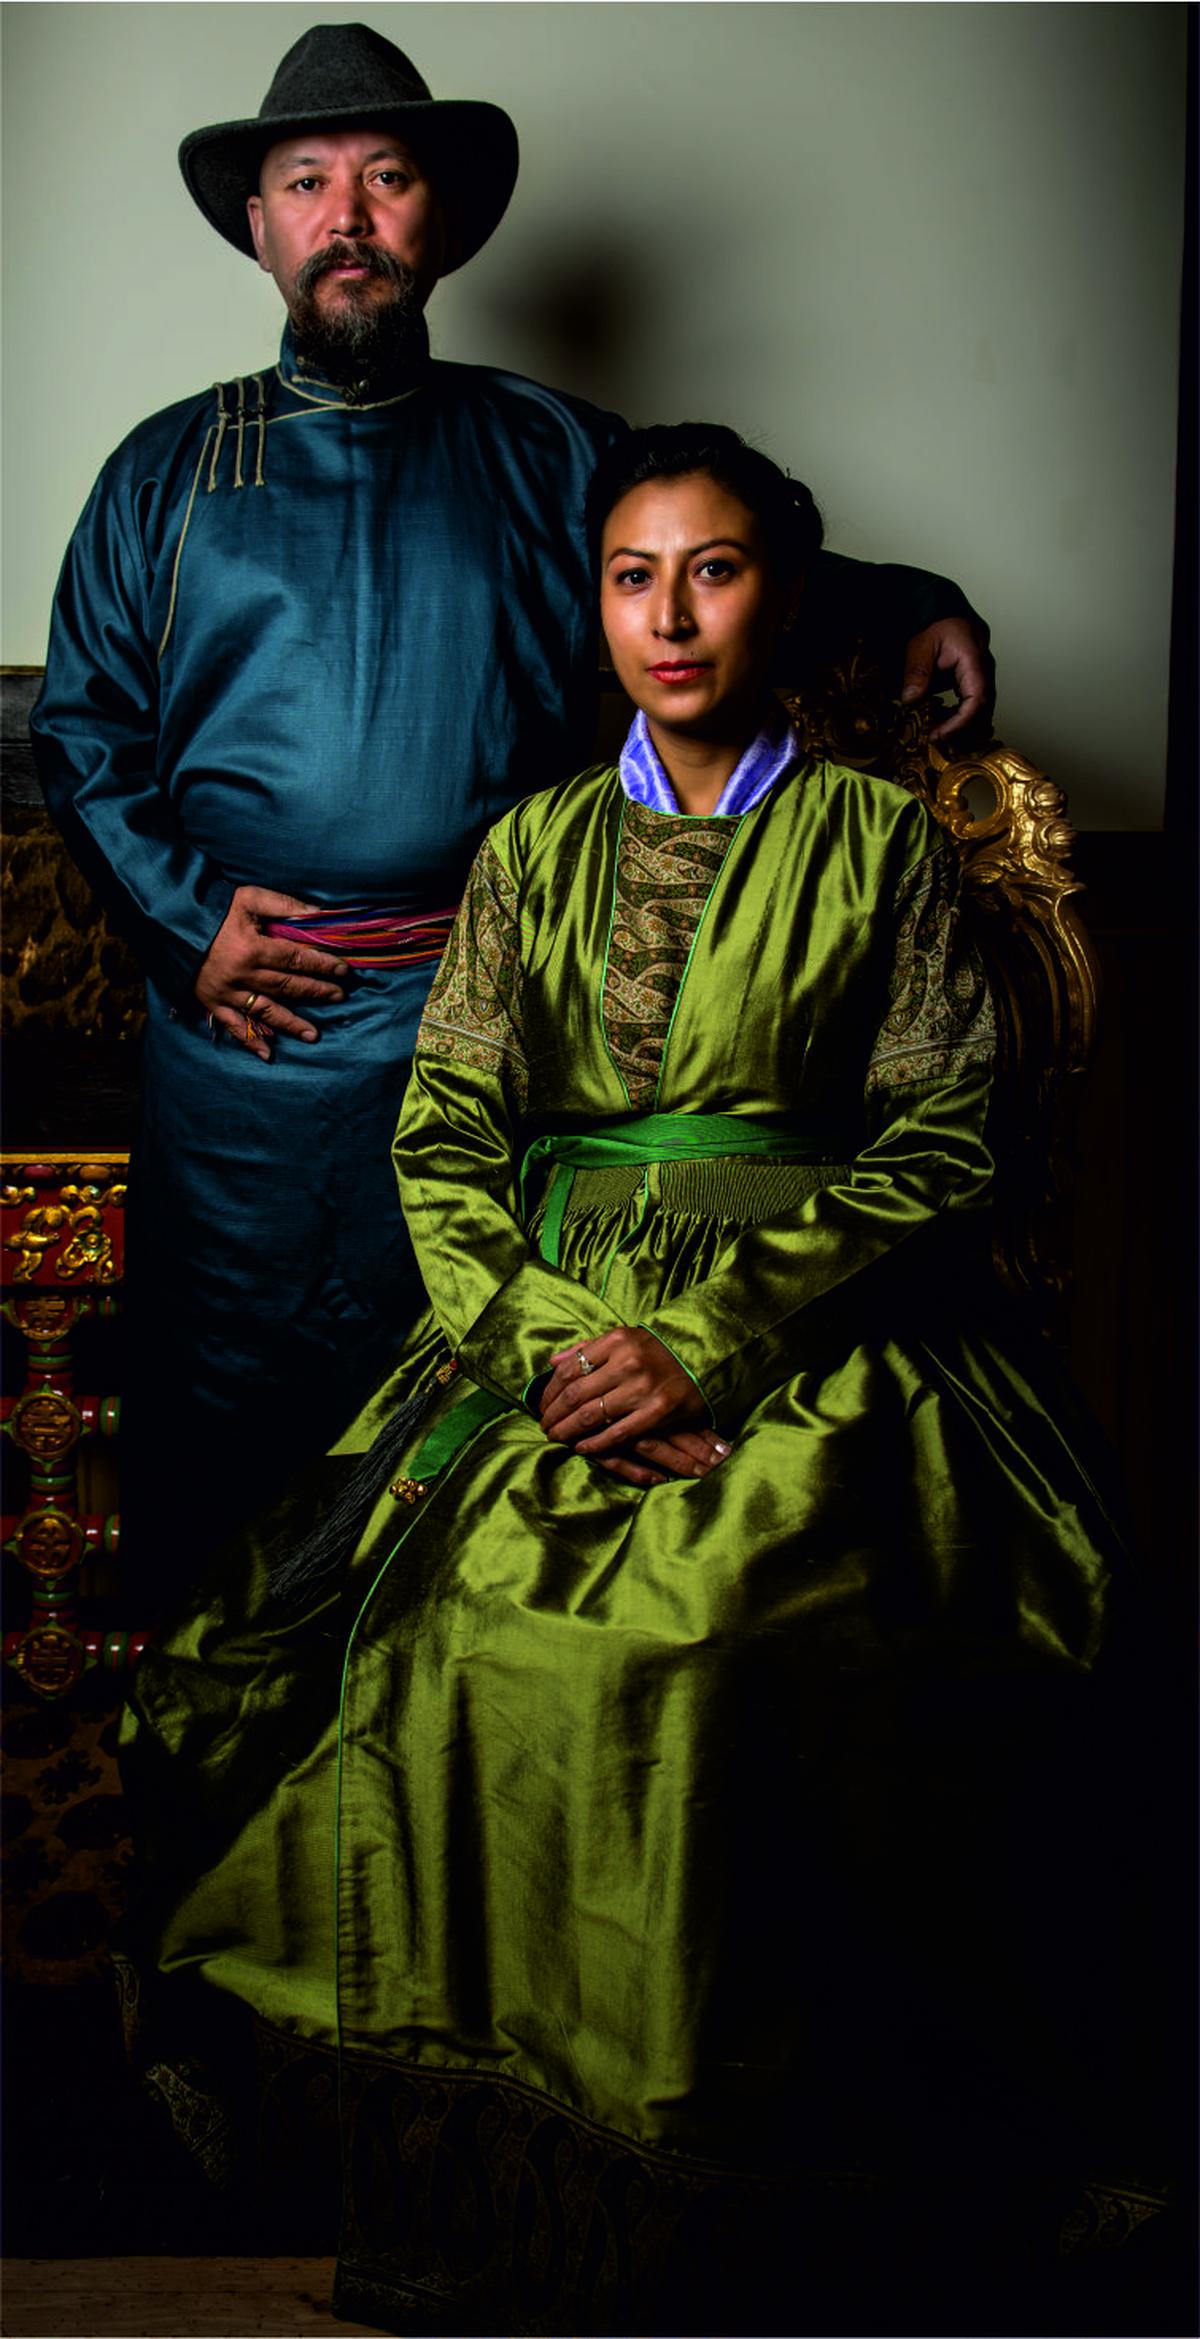  Jigmat Norbu, and his wife Jigmat Wangmo